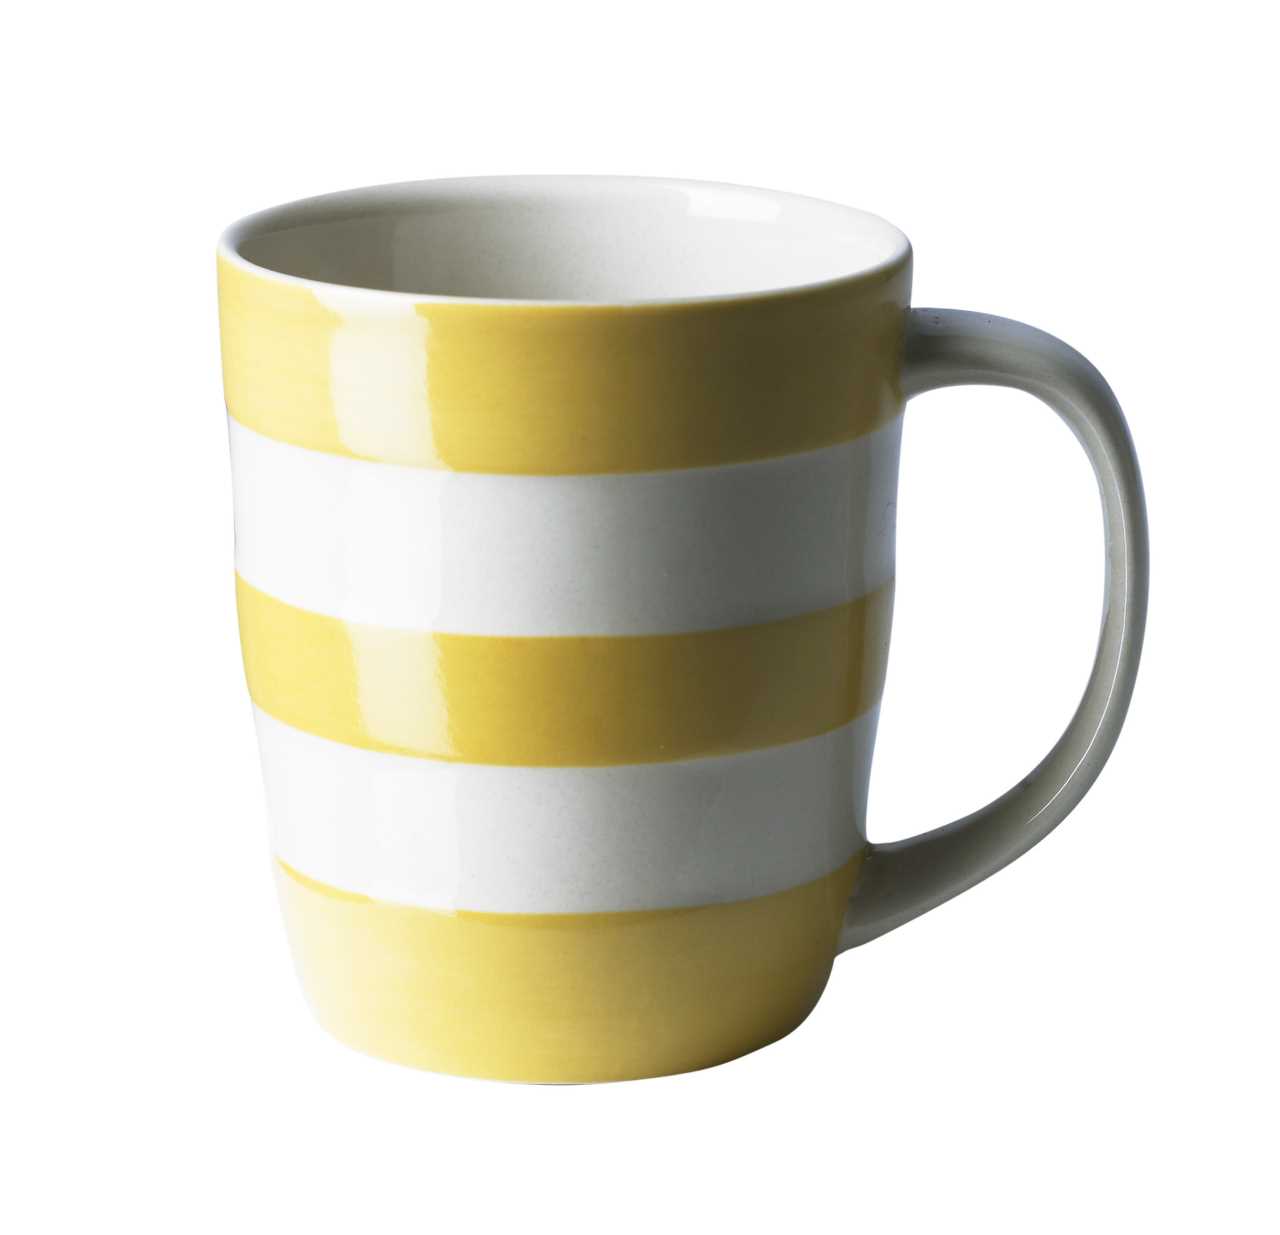 Cornishware Pottery Mug in yellow stripes